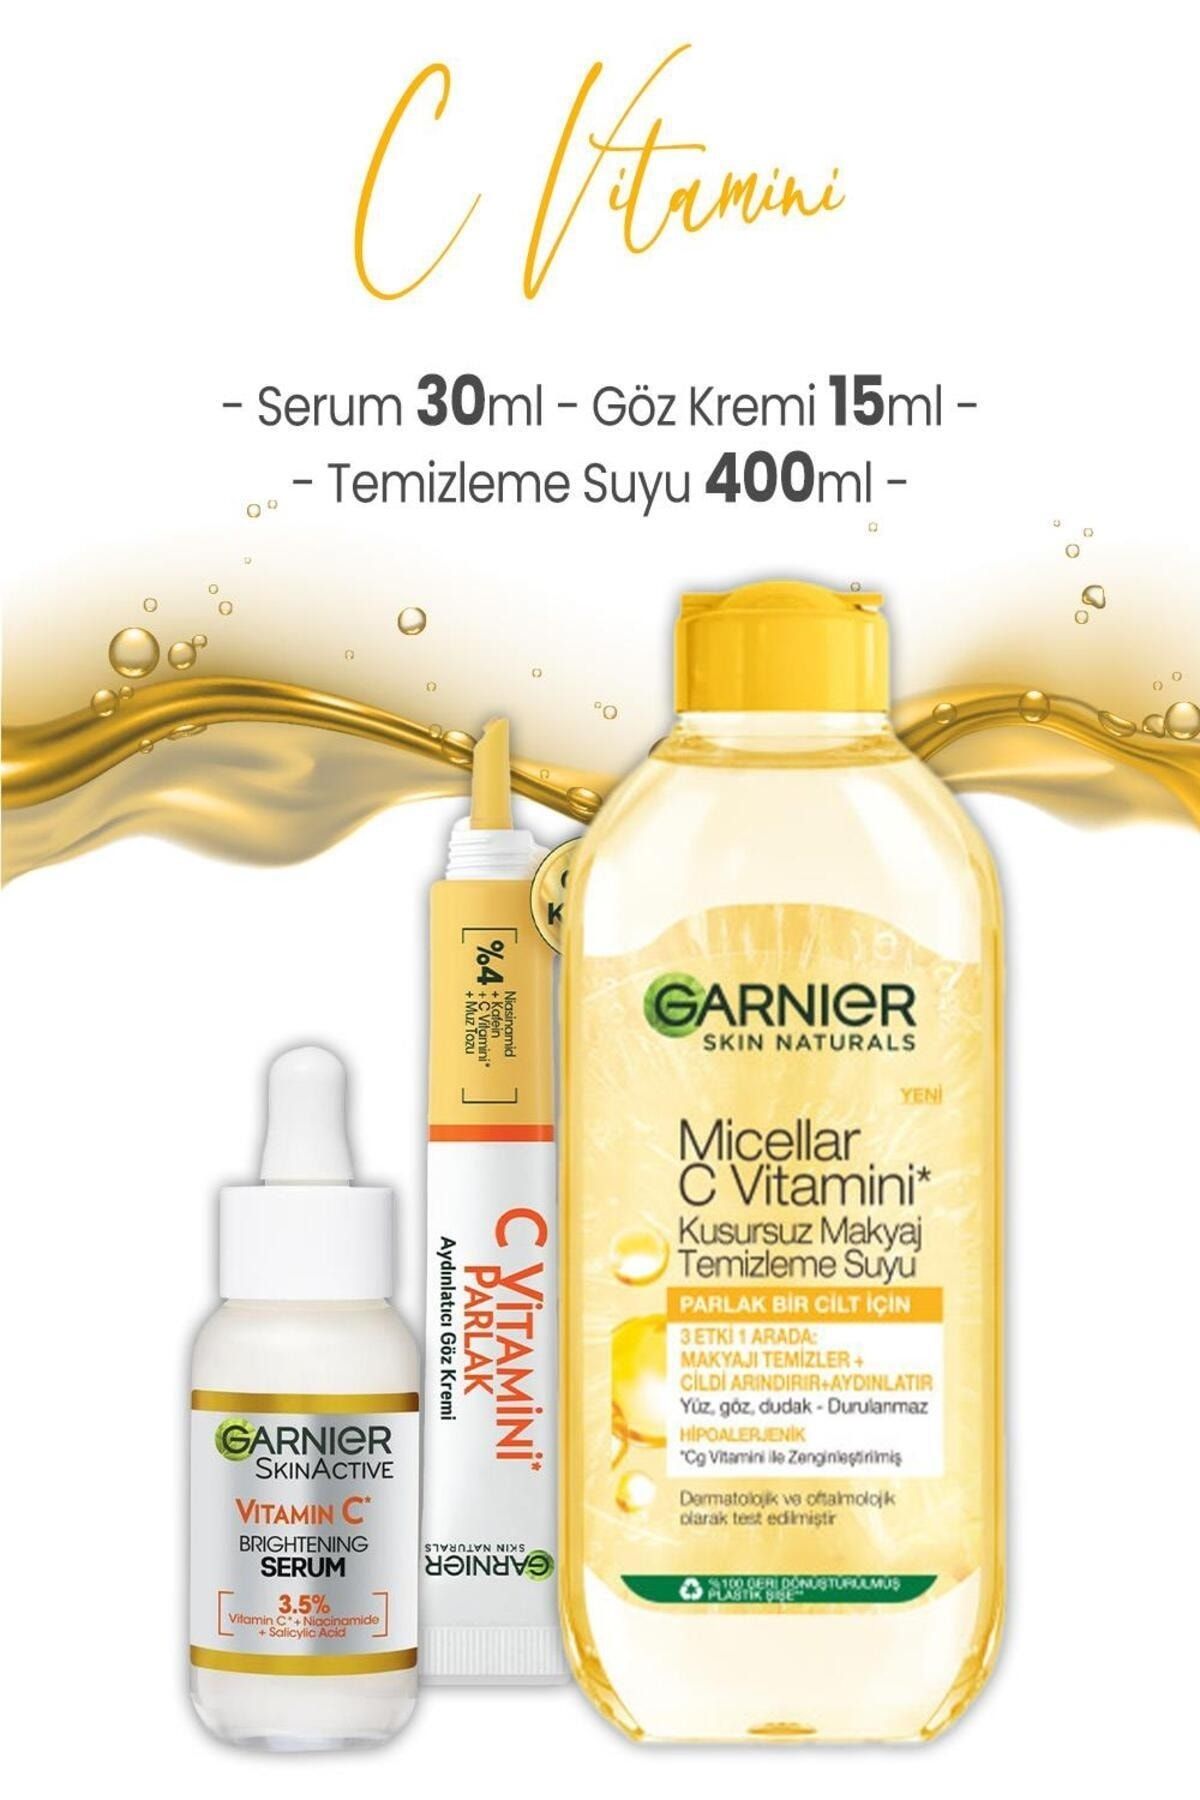 Garnier C Vitamini Serum 30 ml, Göz Kremi 15 ml ve Temizleme Suyu 400 ml